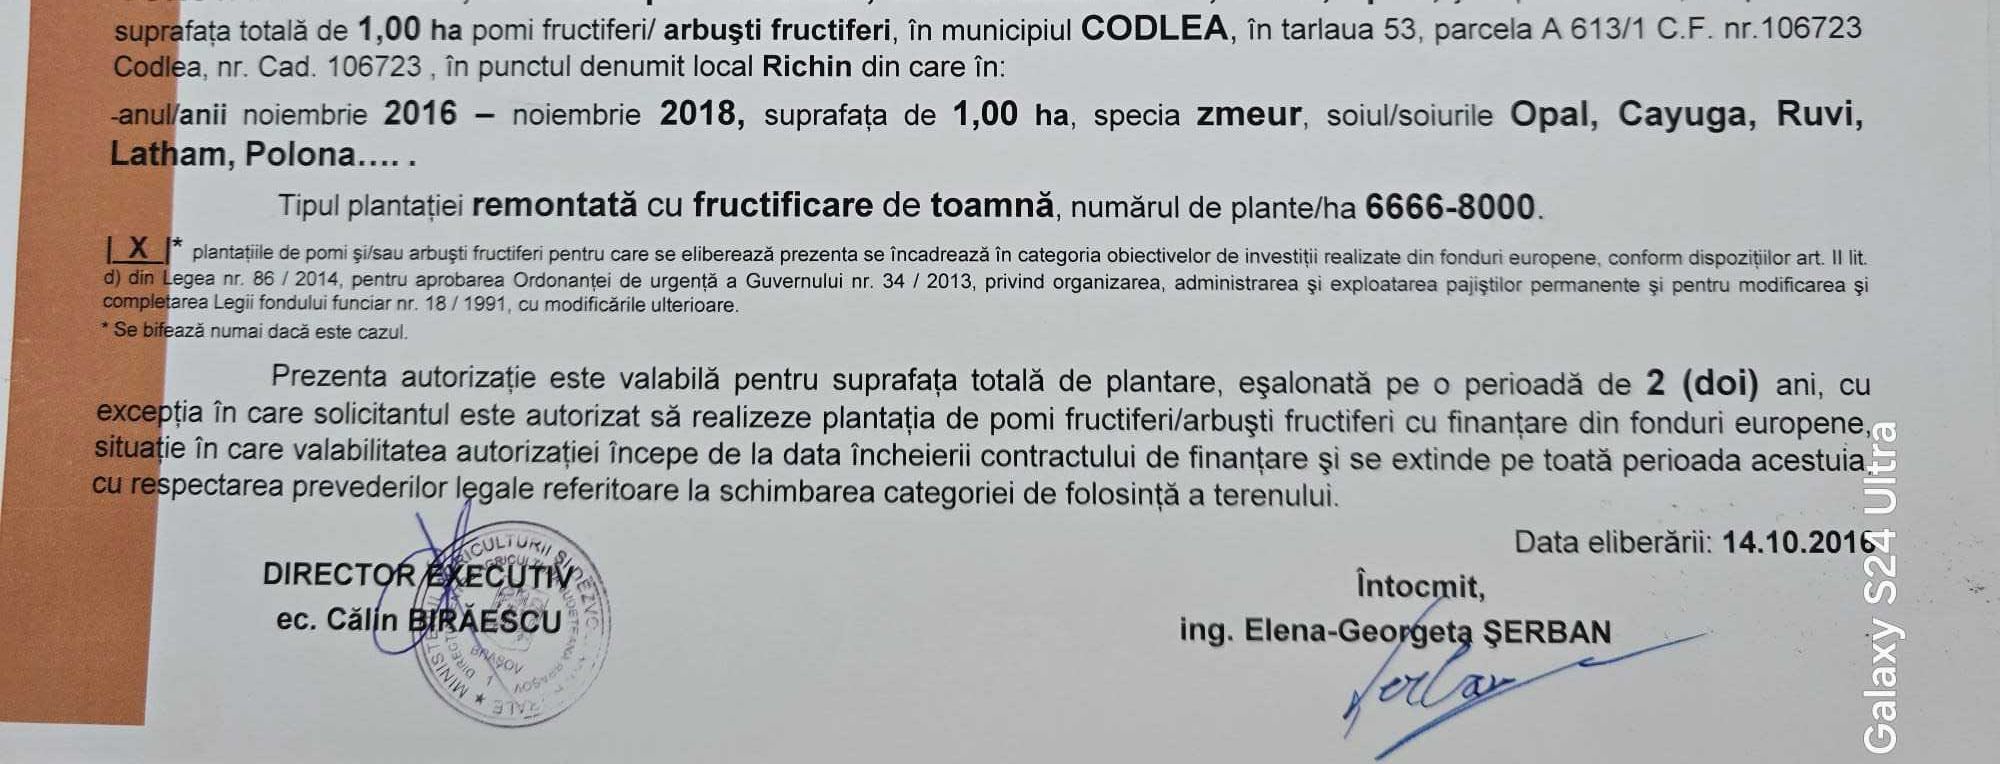 OFERTA Teren   11000m2/ 25000 euro Codlea proiect de plantatie aprobat